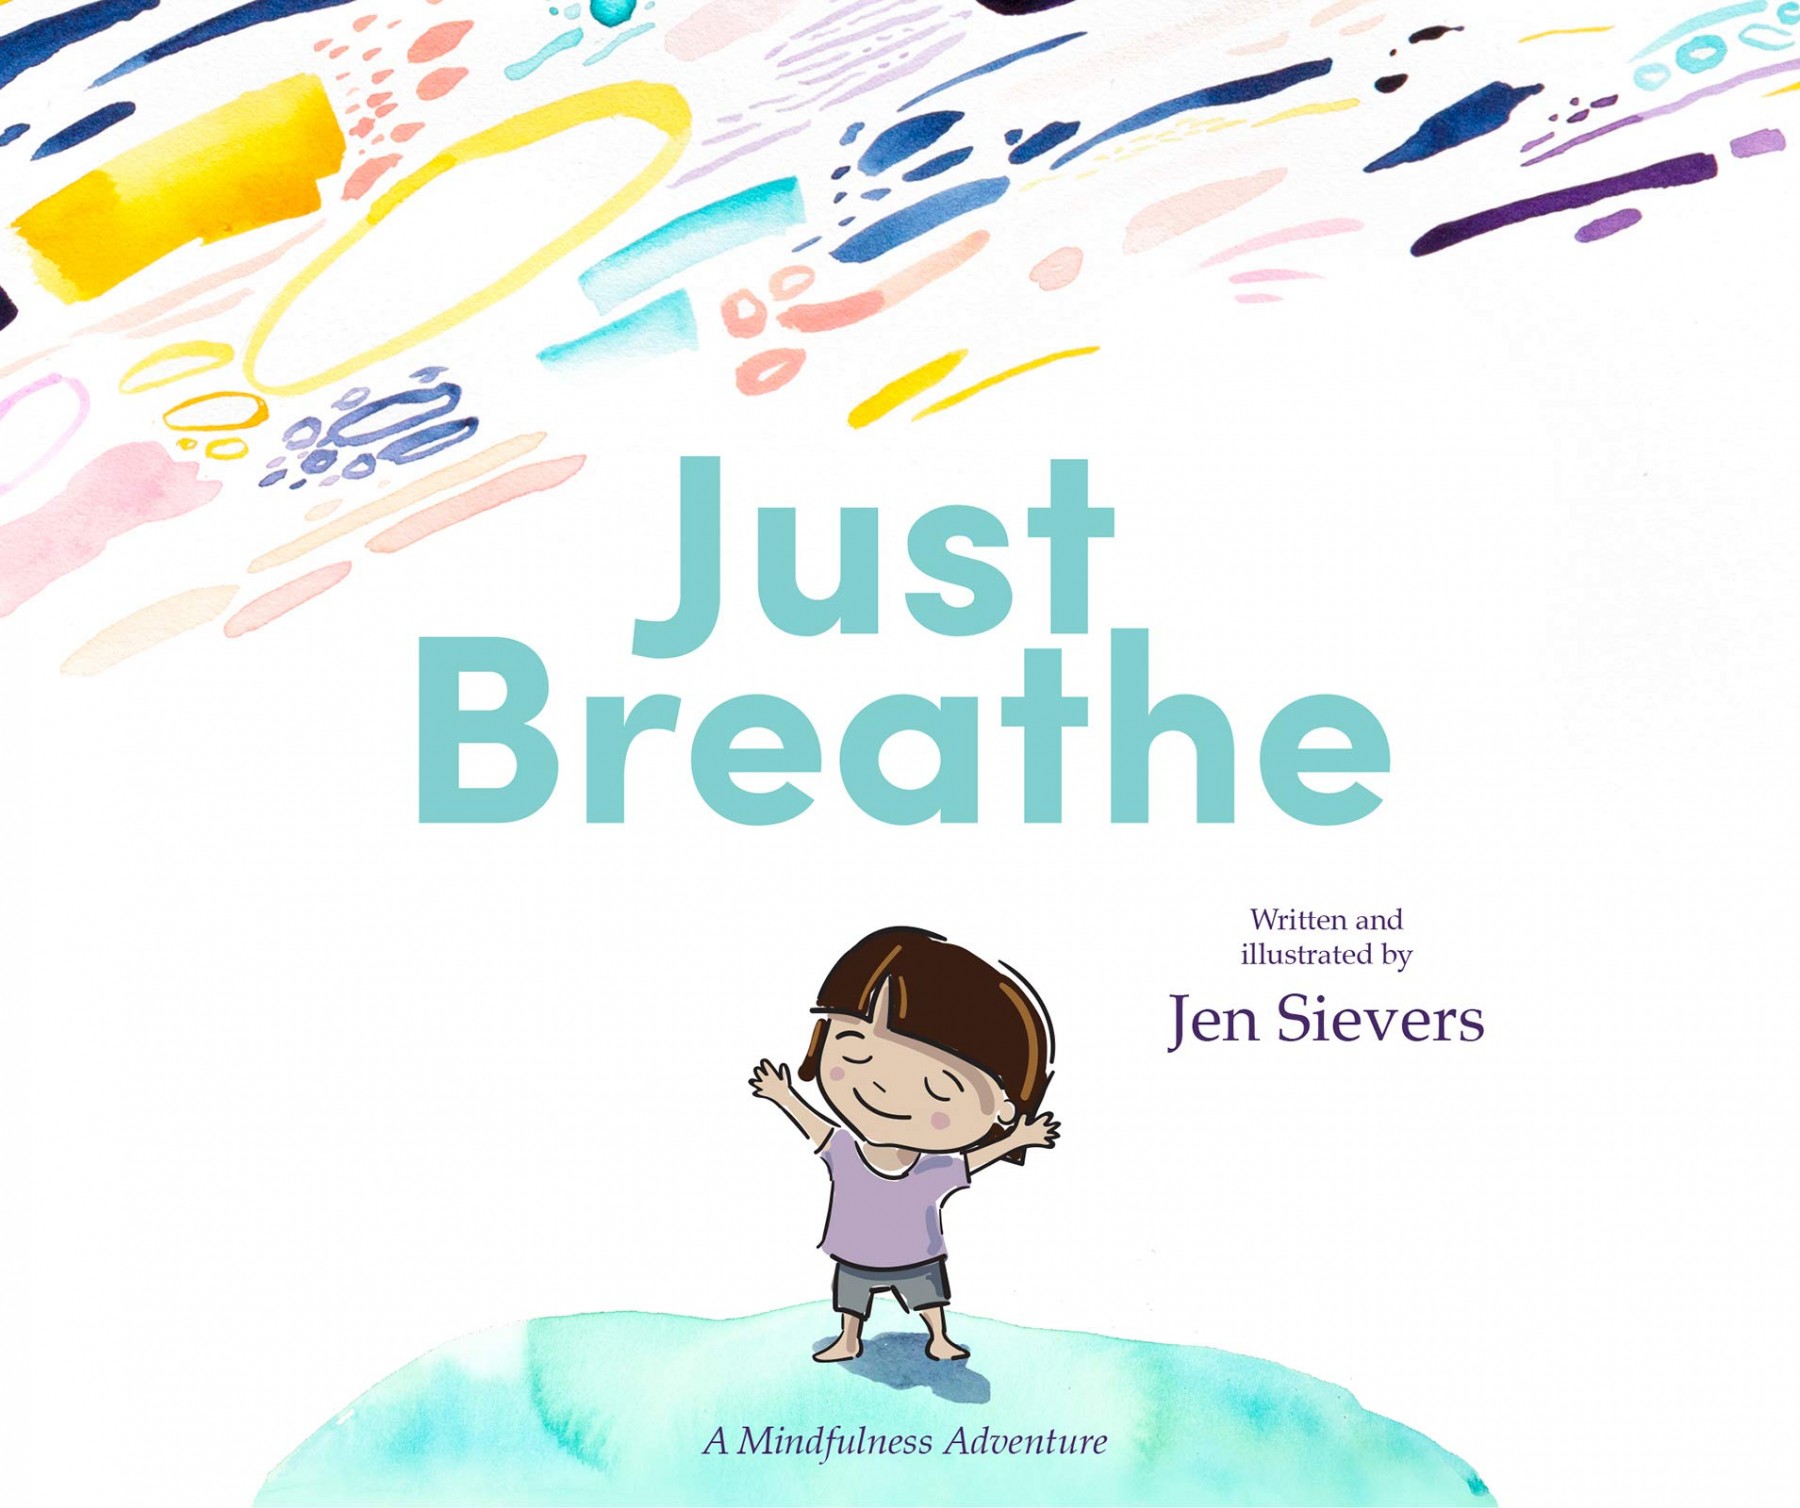 Just breathe: A mindfulness adventure